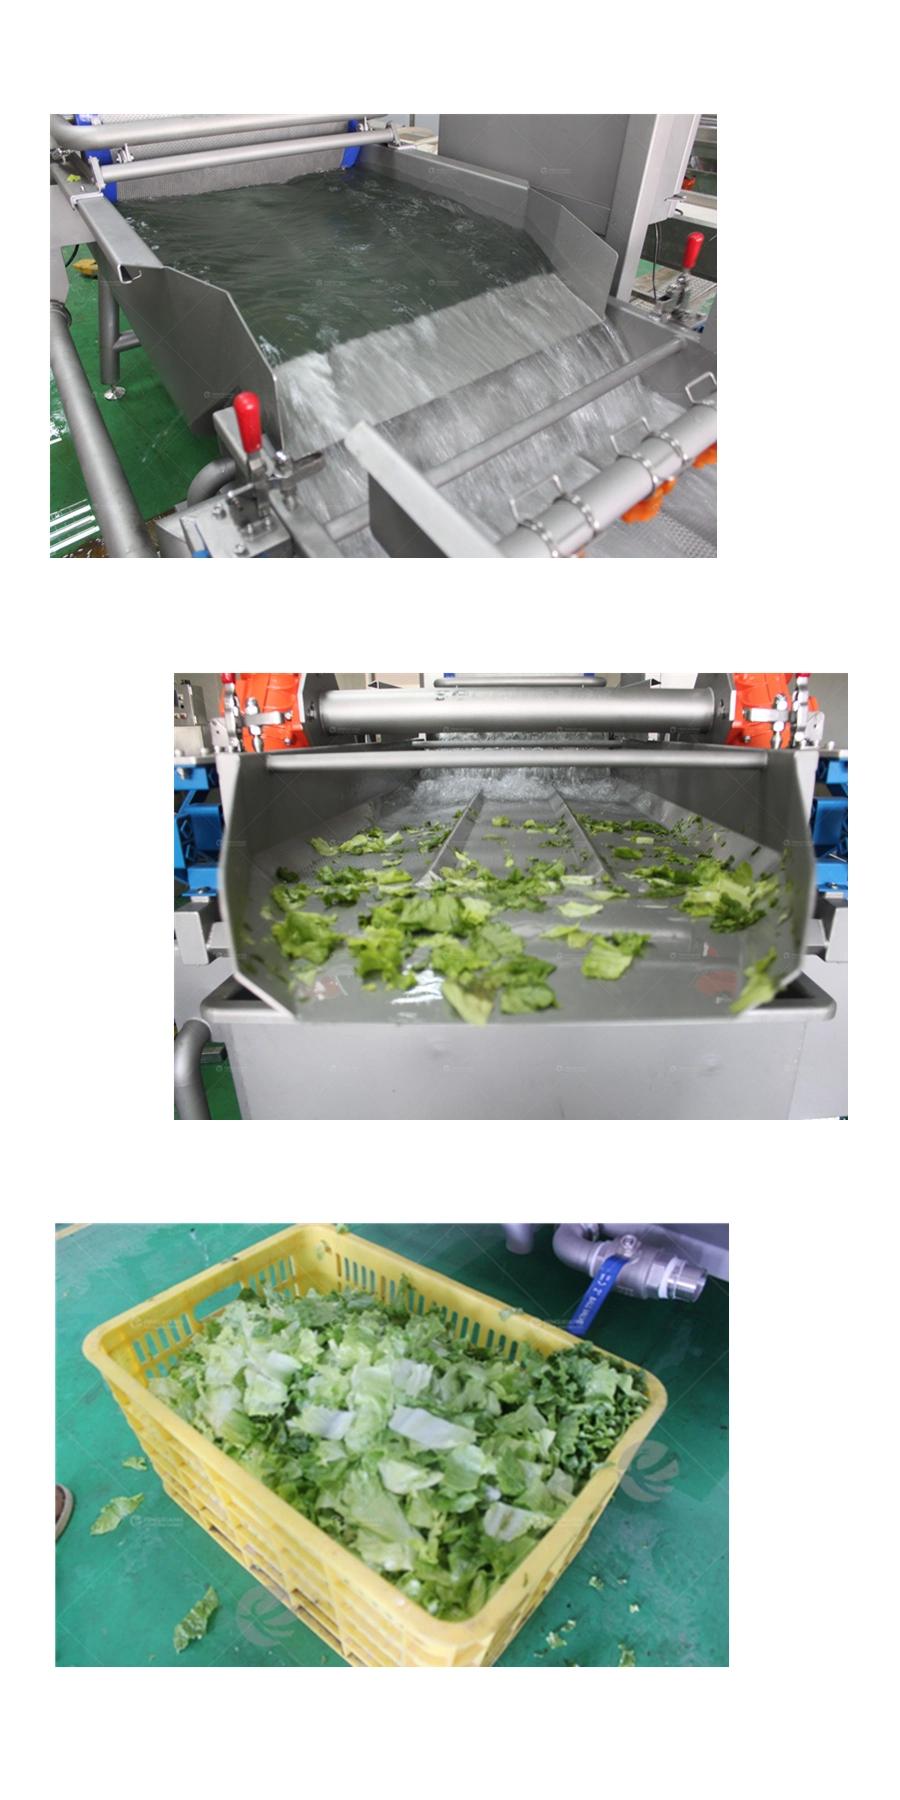 Xwa-1300 Vortex Type Vegetable Washing Machine Vegetable Washer Processor